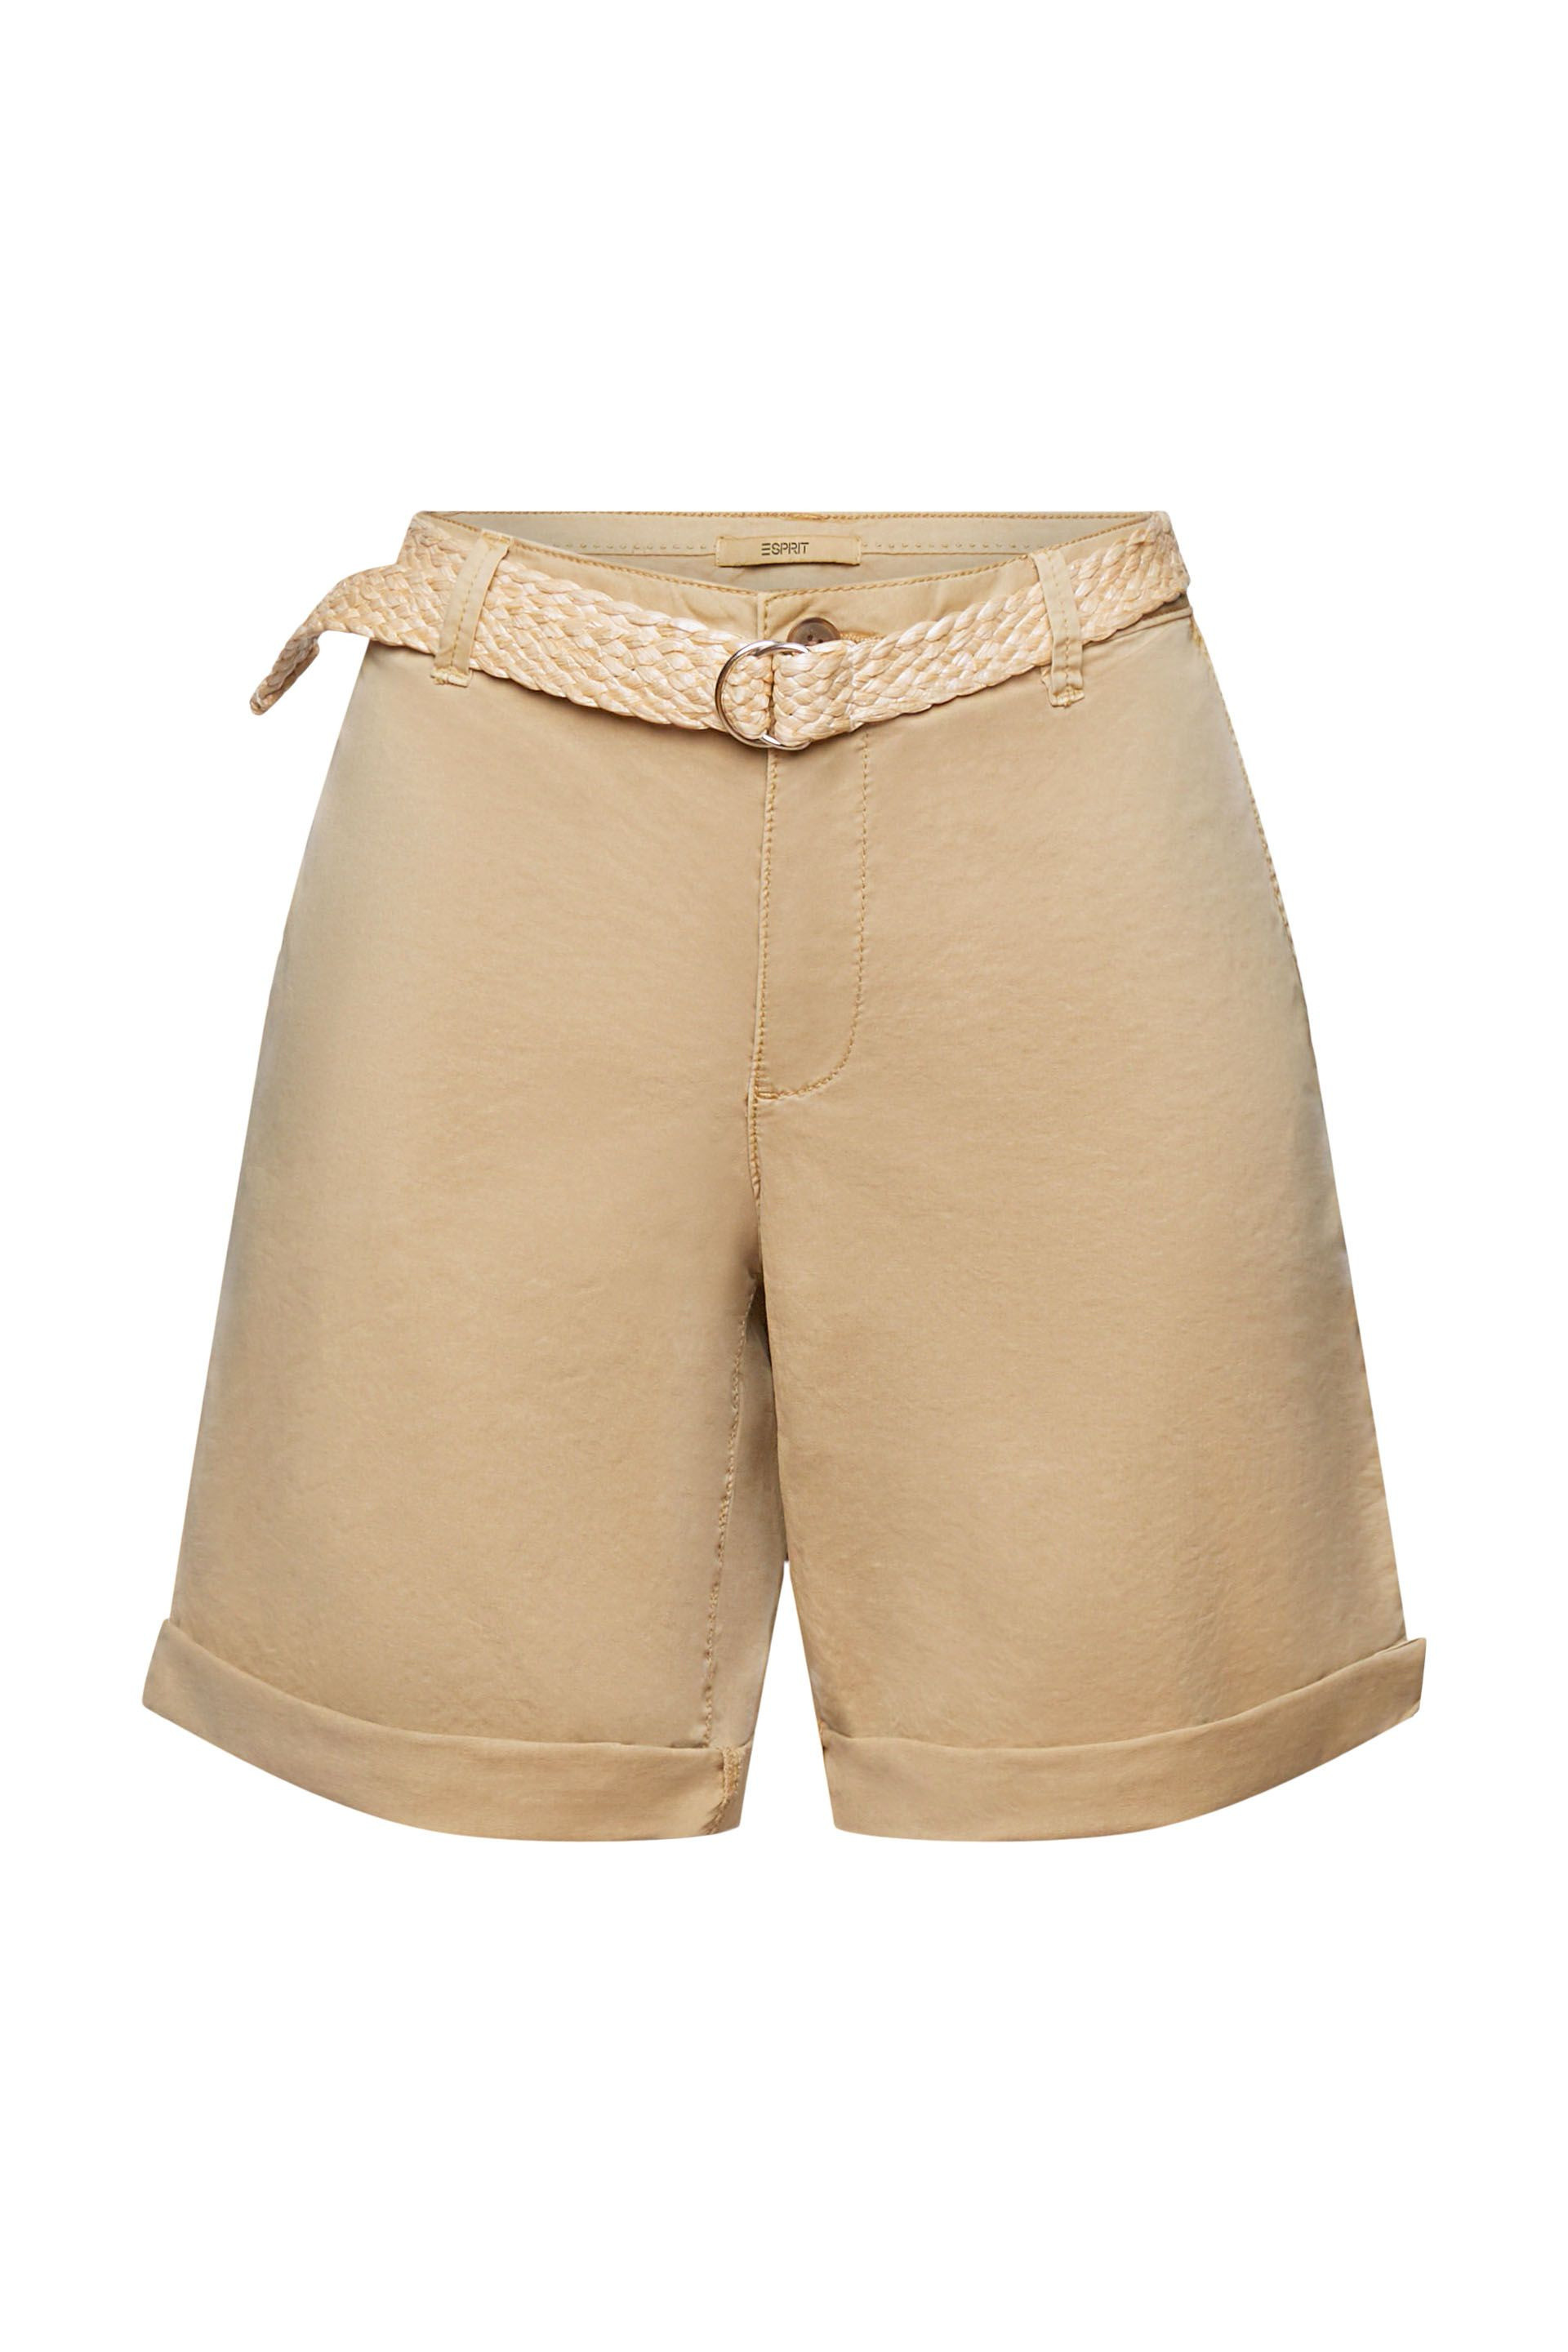 Esprit - Shorts with braided raffia belt, Sand, large image number 0